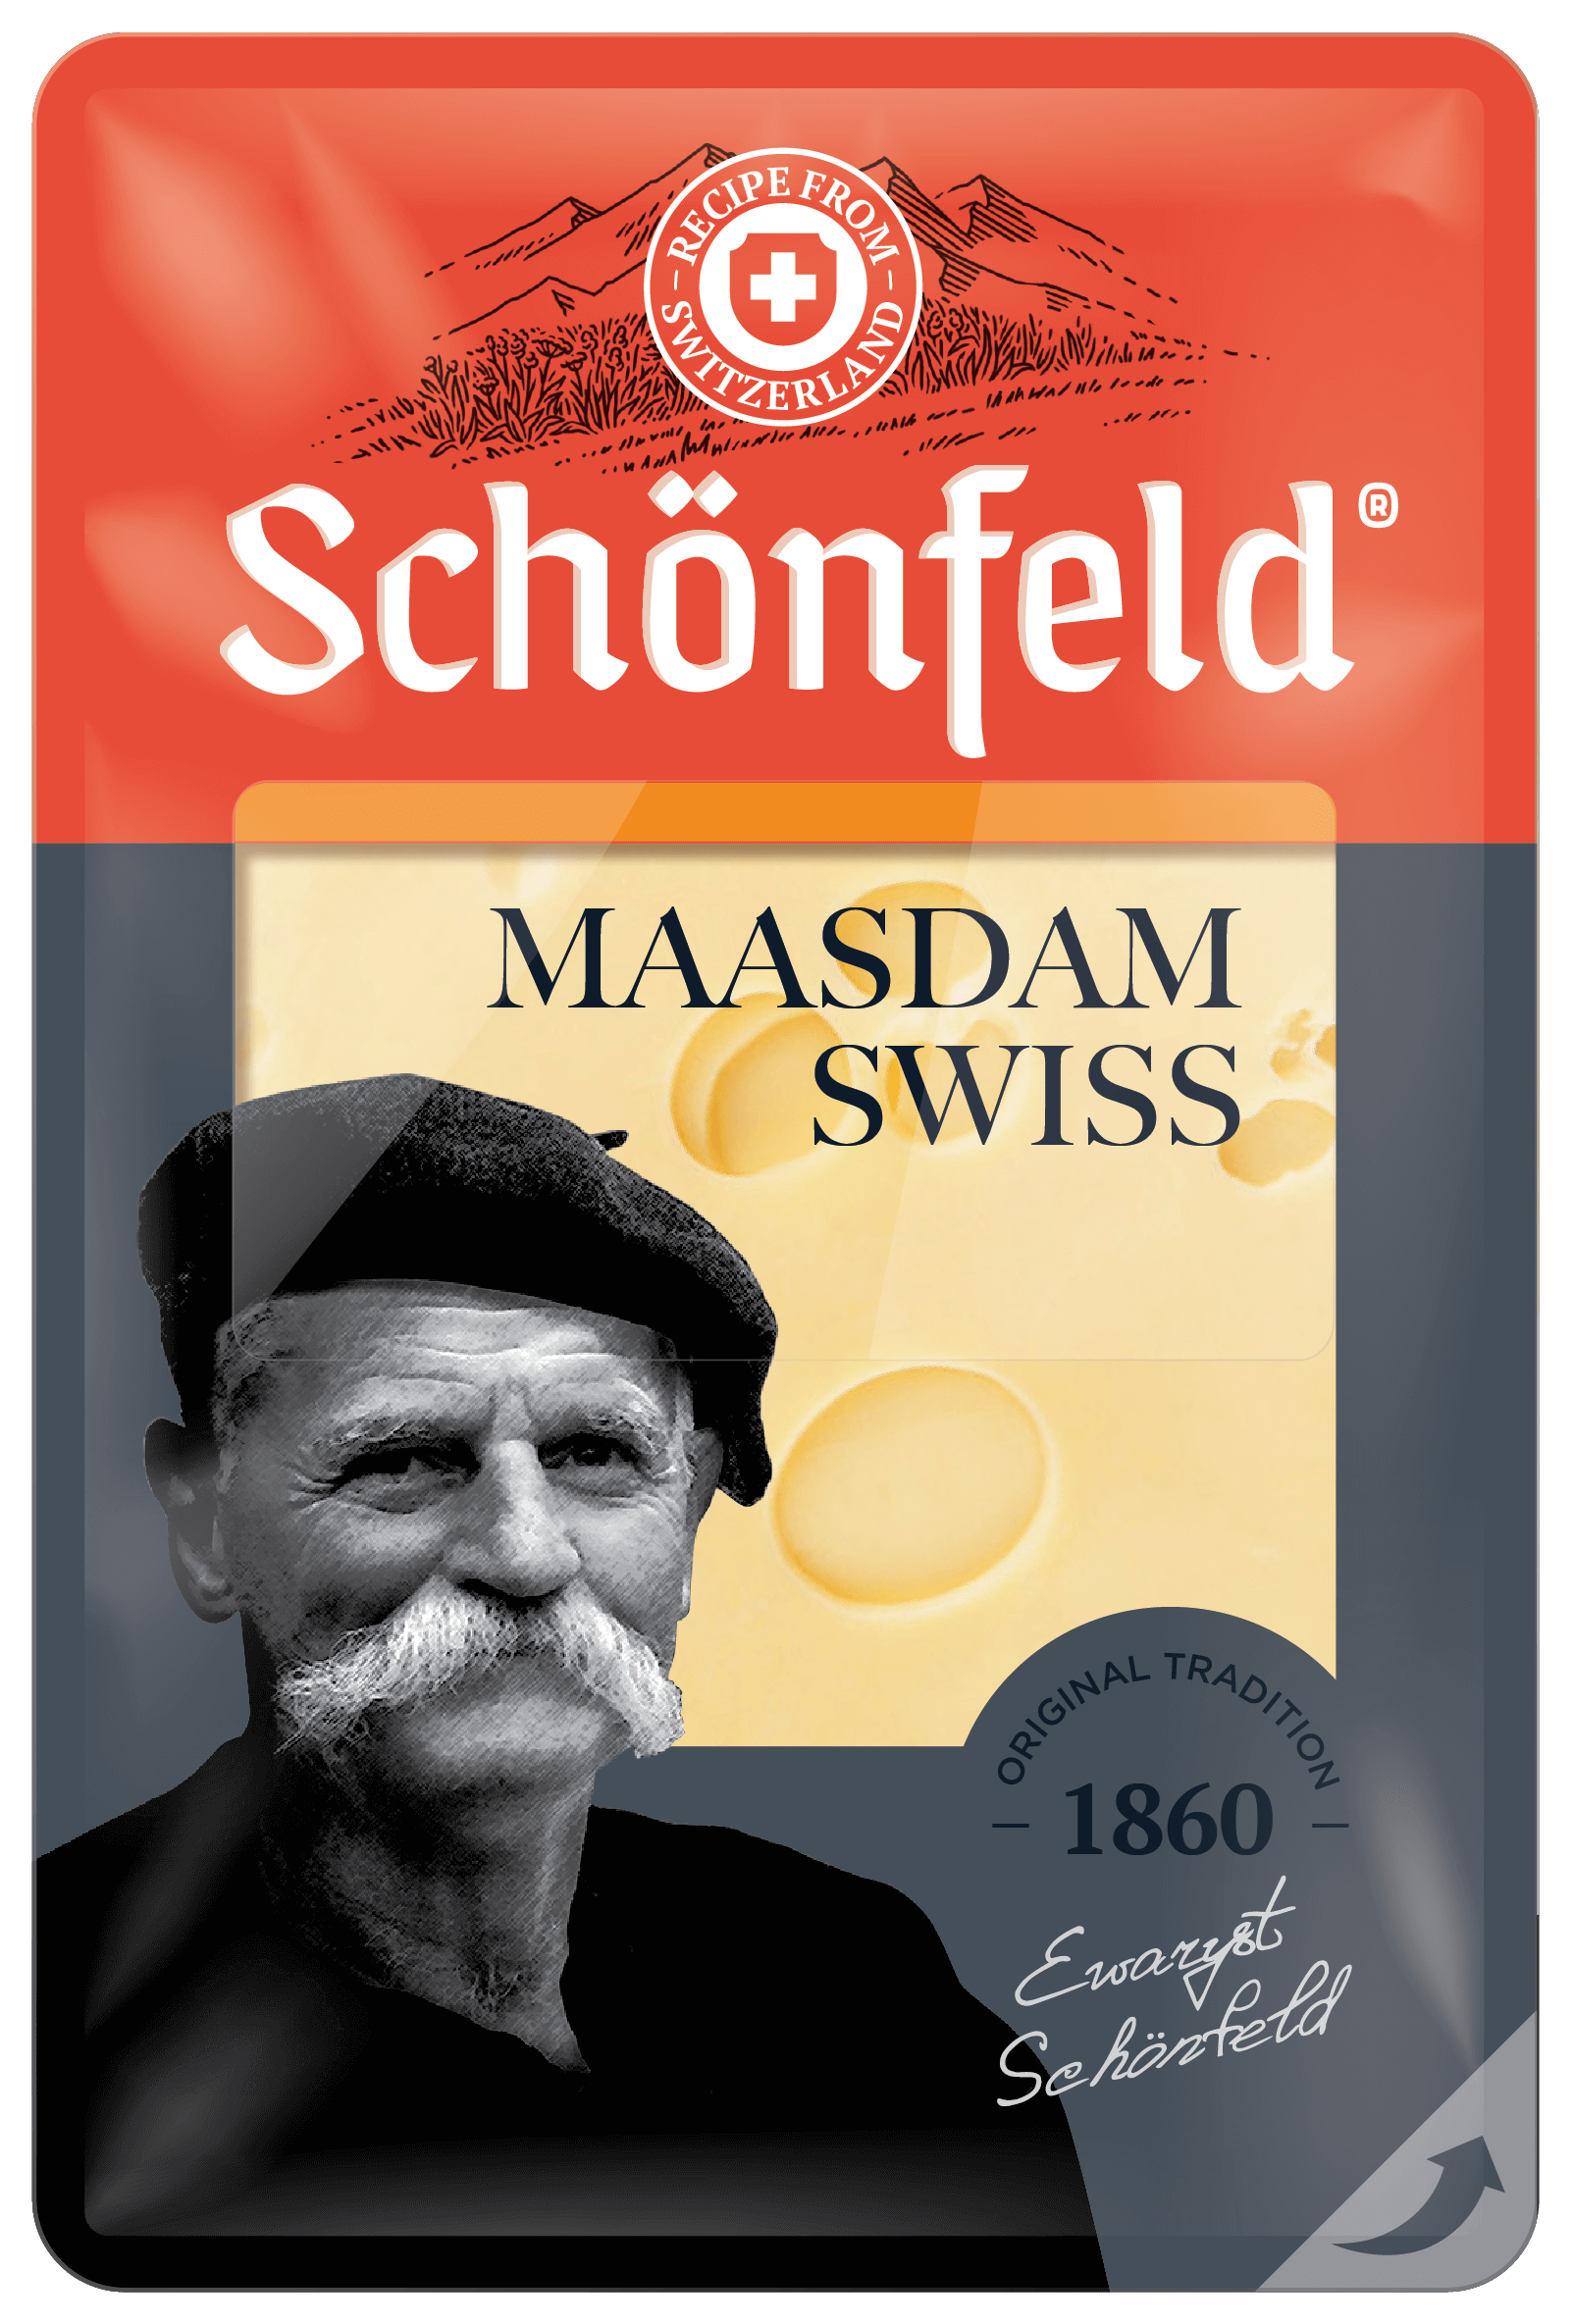 Swiss Maasdam